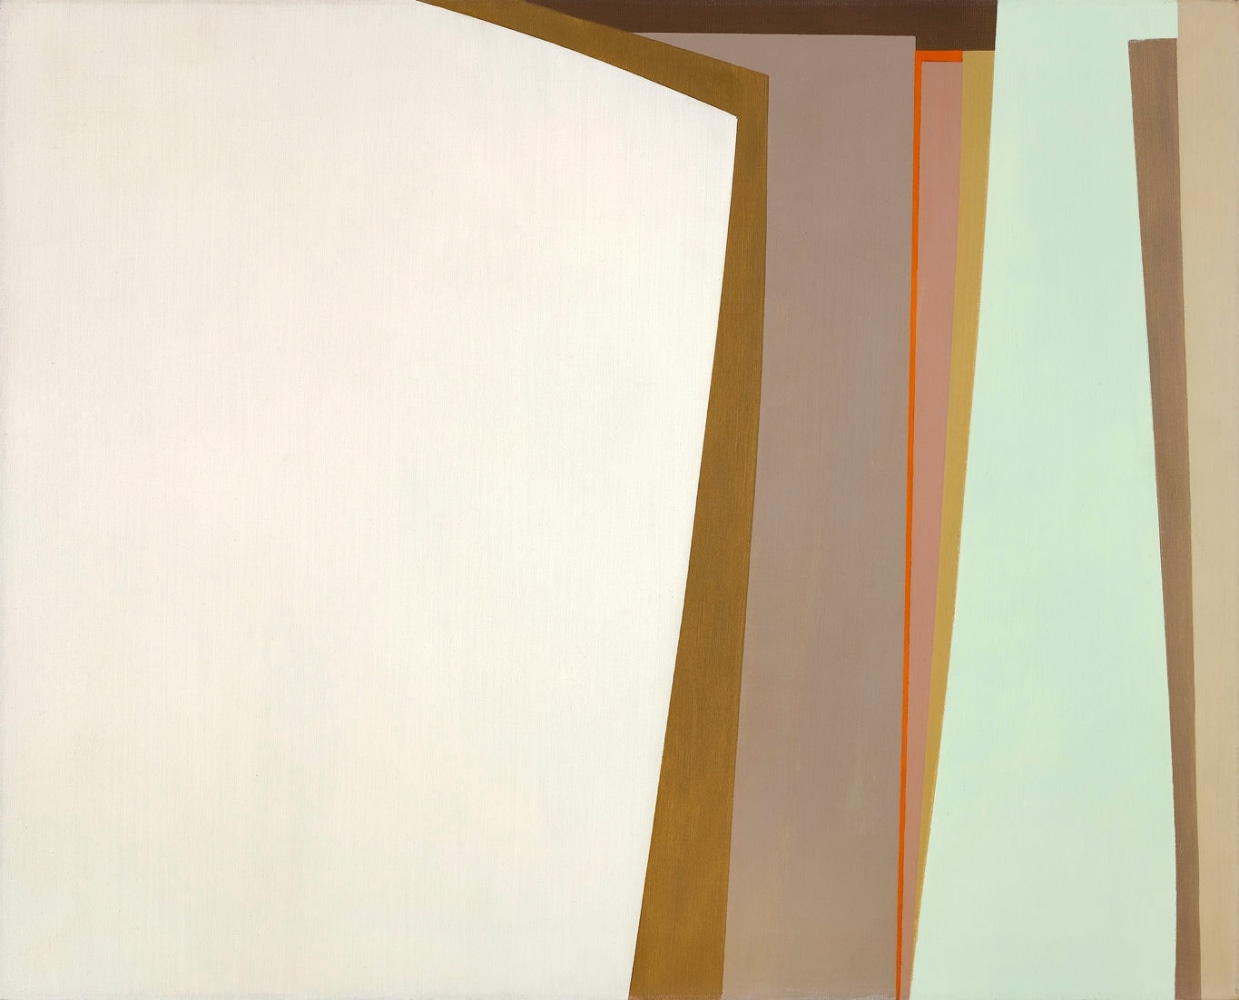 Landscape: White and Orange, 1962

oil on canvas

24 x 30 inches; 61 x 76.2 centimeters